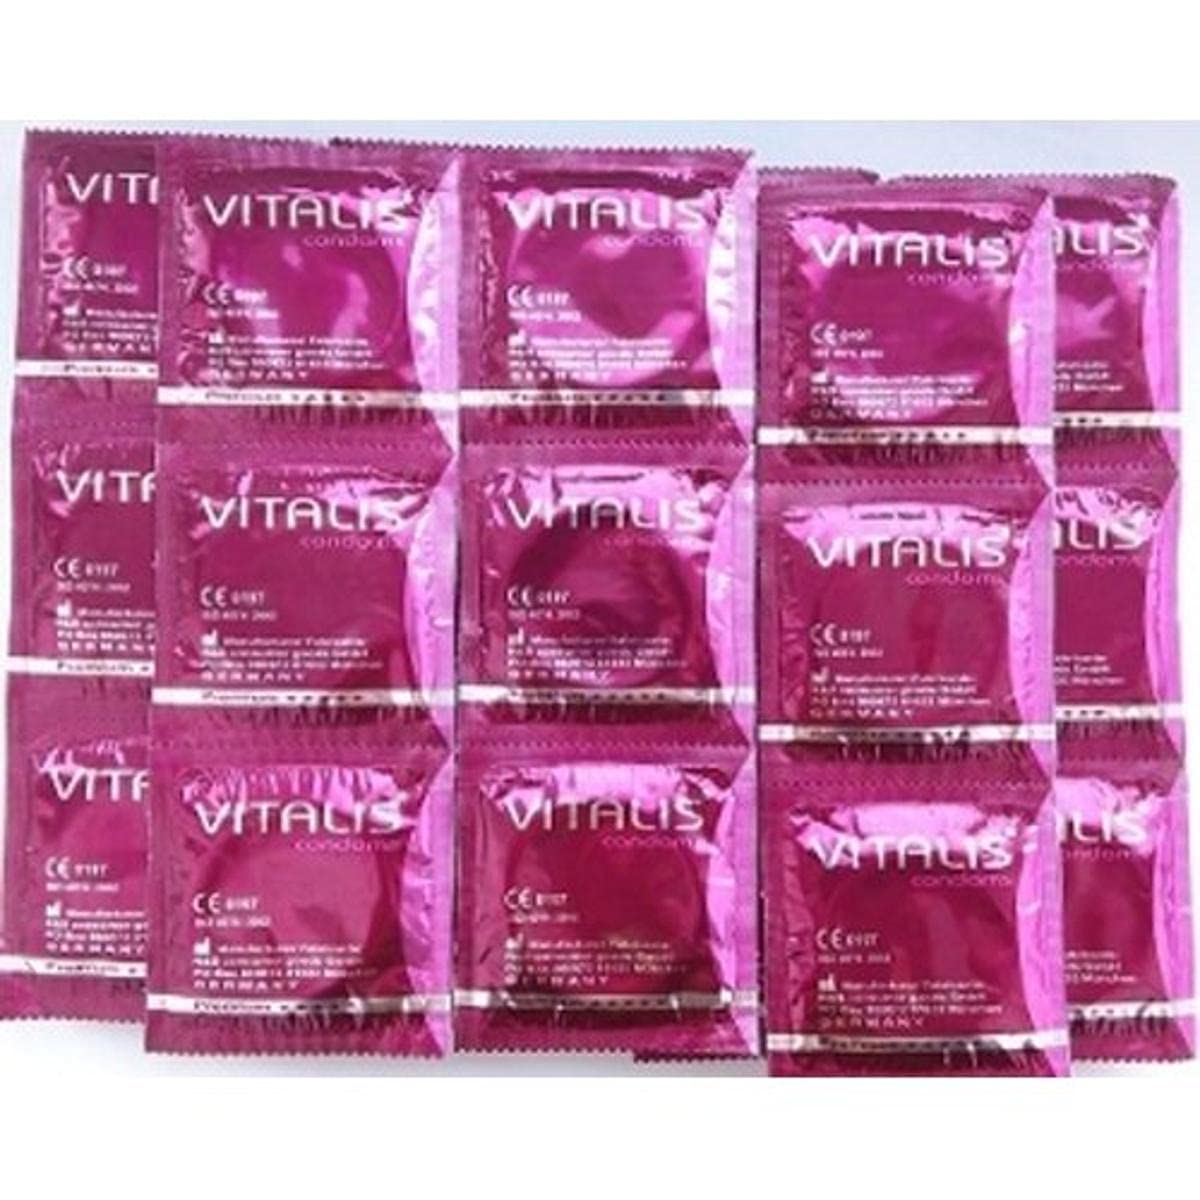 VITALIS 100 Kondome Pack extra stark & glatt I Nennbreite 53 mm I Gefühlsechte transparente Kondome I 100 Premium Kondome mit dickerer Wandstärke von 0,08 mm I Zarte Kondome für Männer